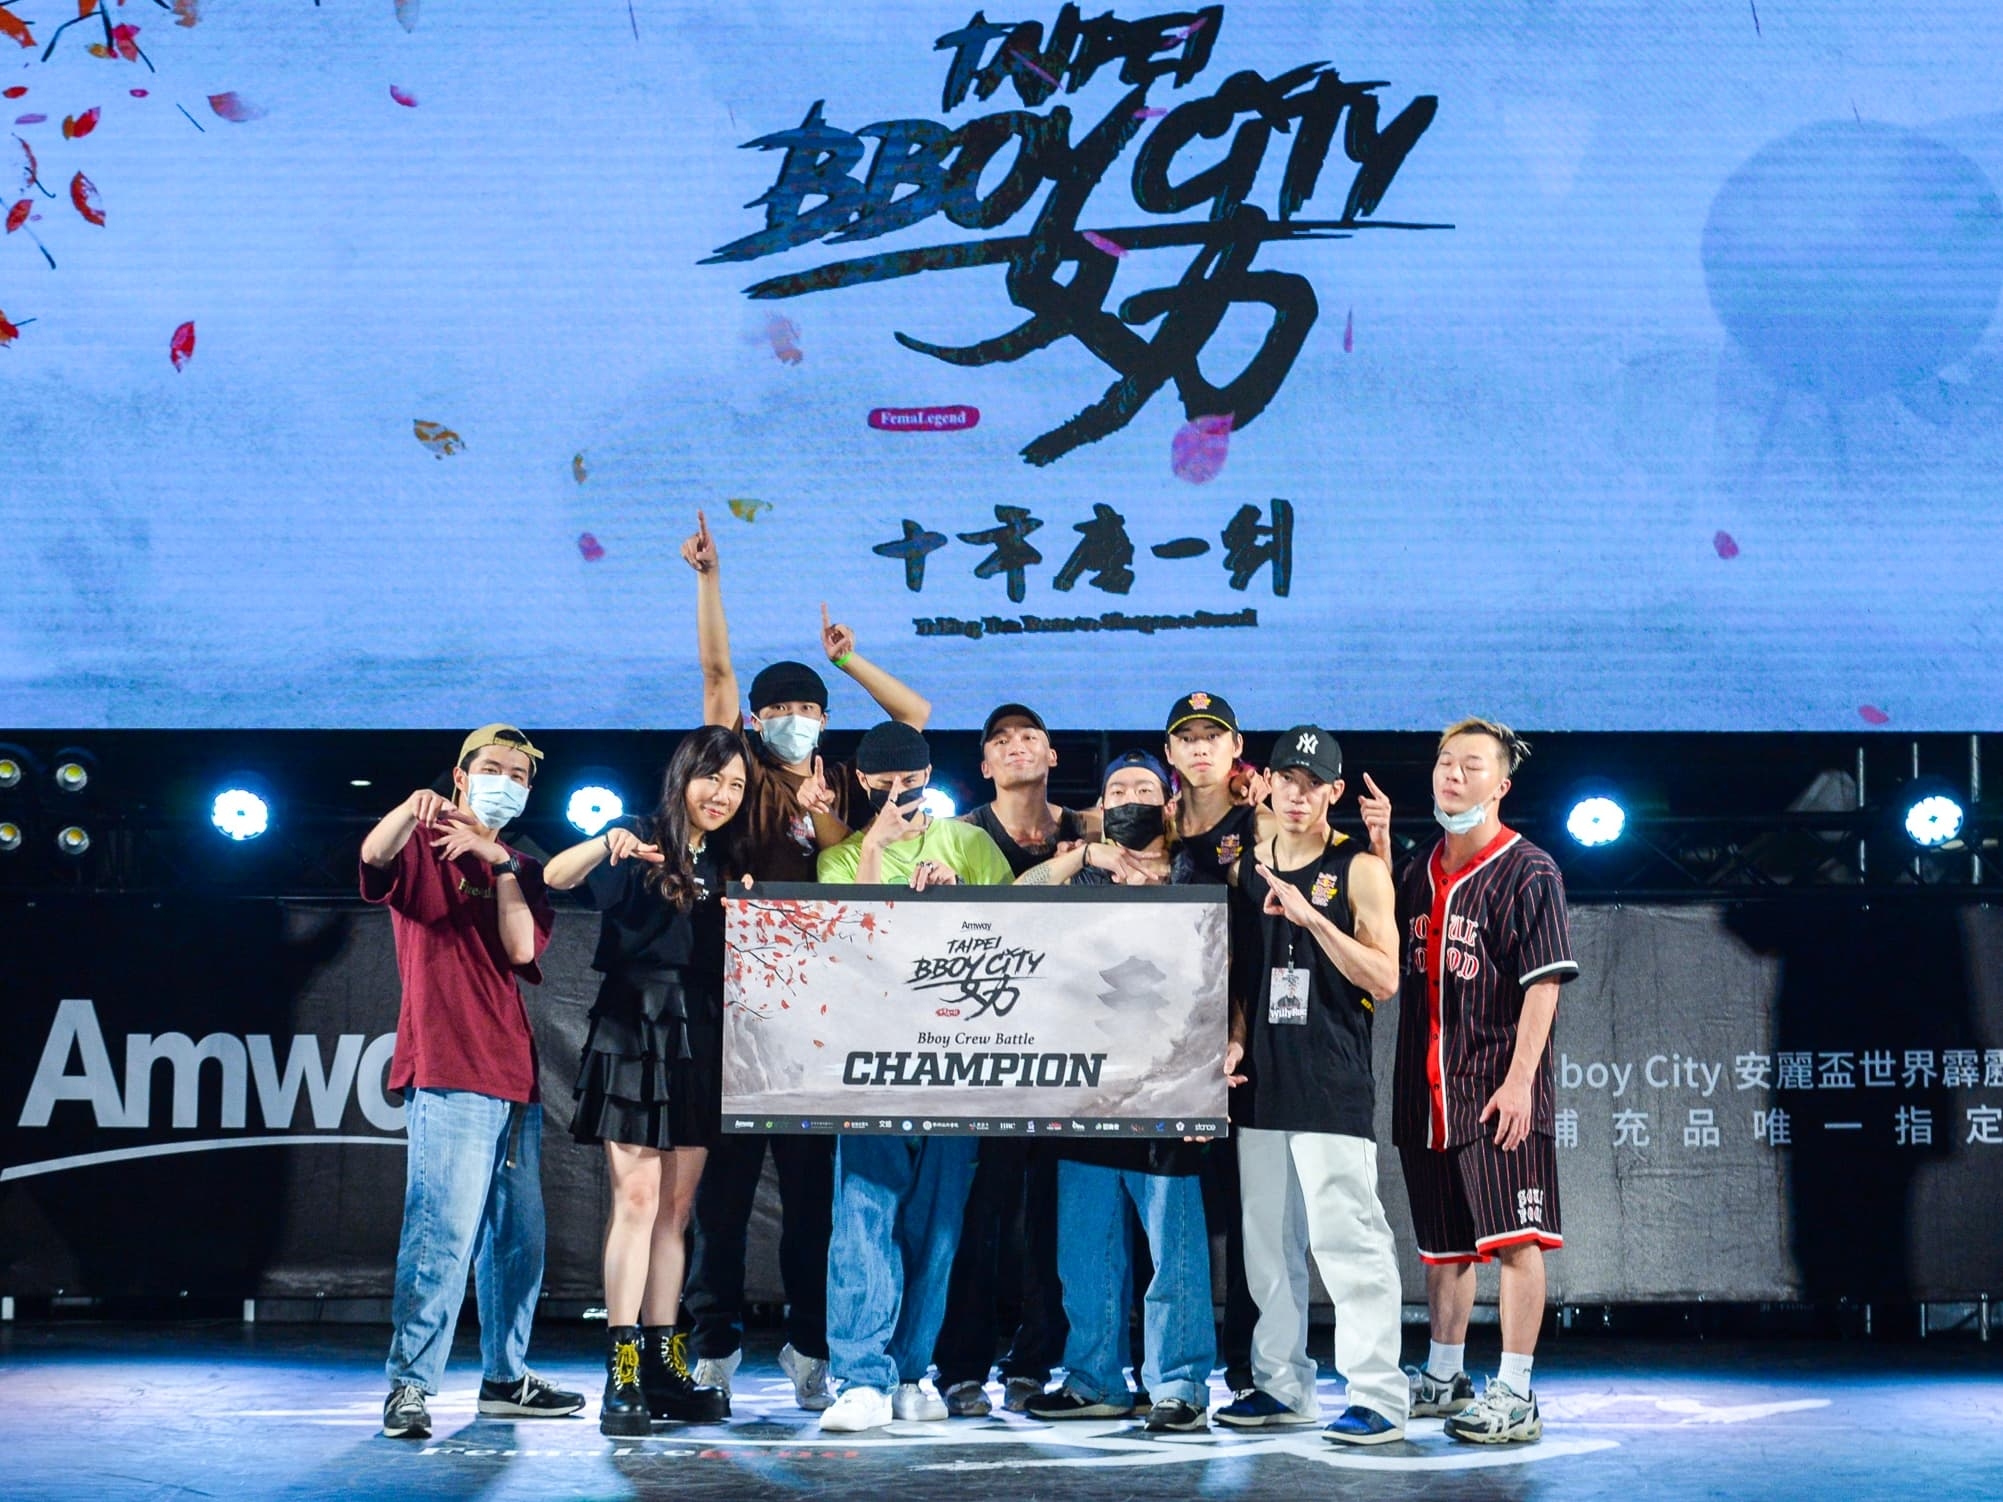 「 Taipei Bboy City 安麗盃世界霹靂舞大賽」完美落幕！來自12國、超過700位頂尖舞者直播連線完成史上最強PK賽！